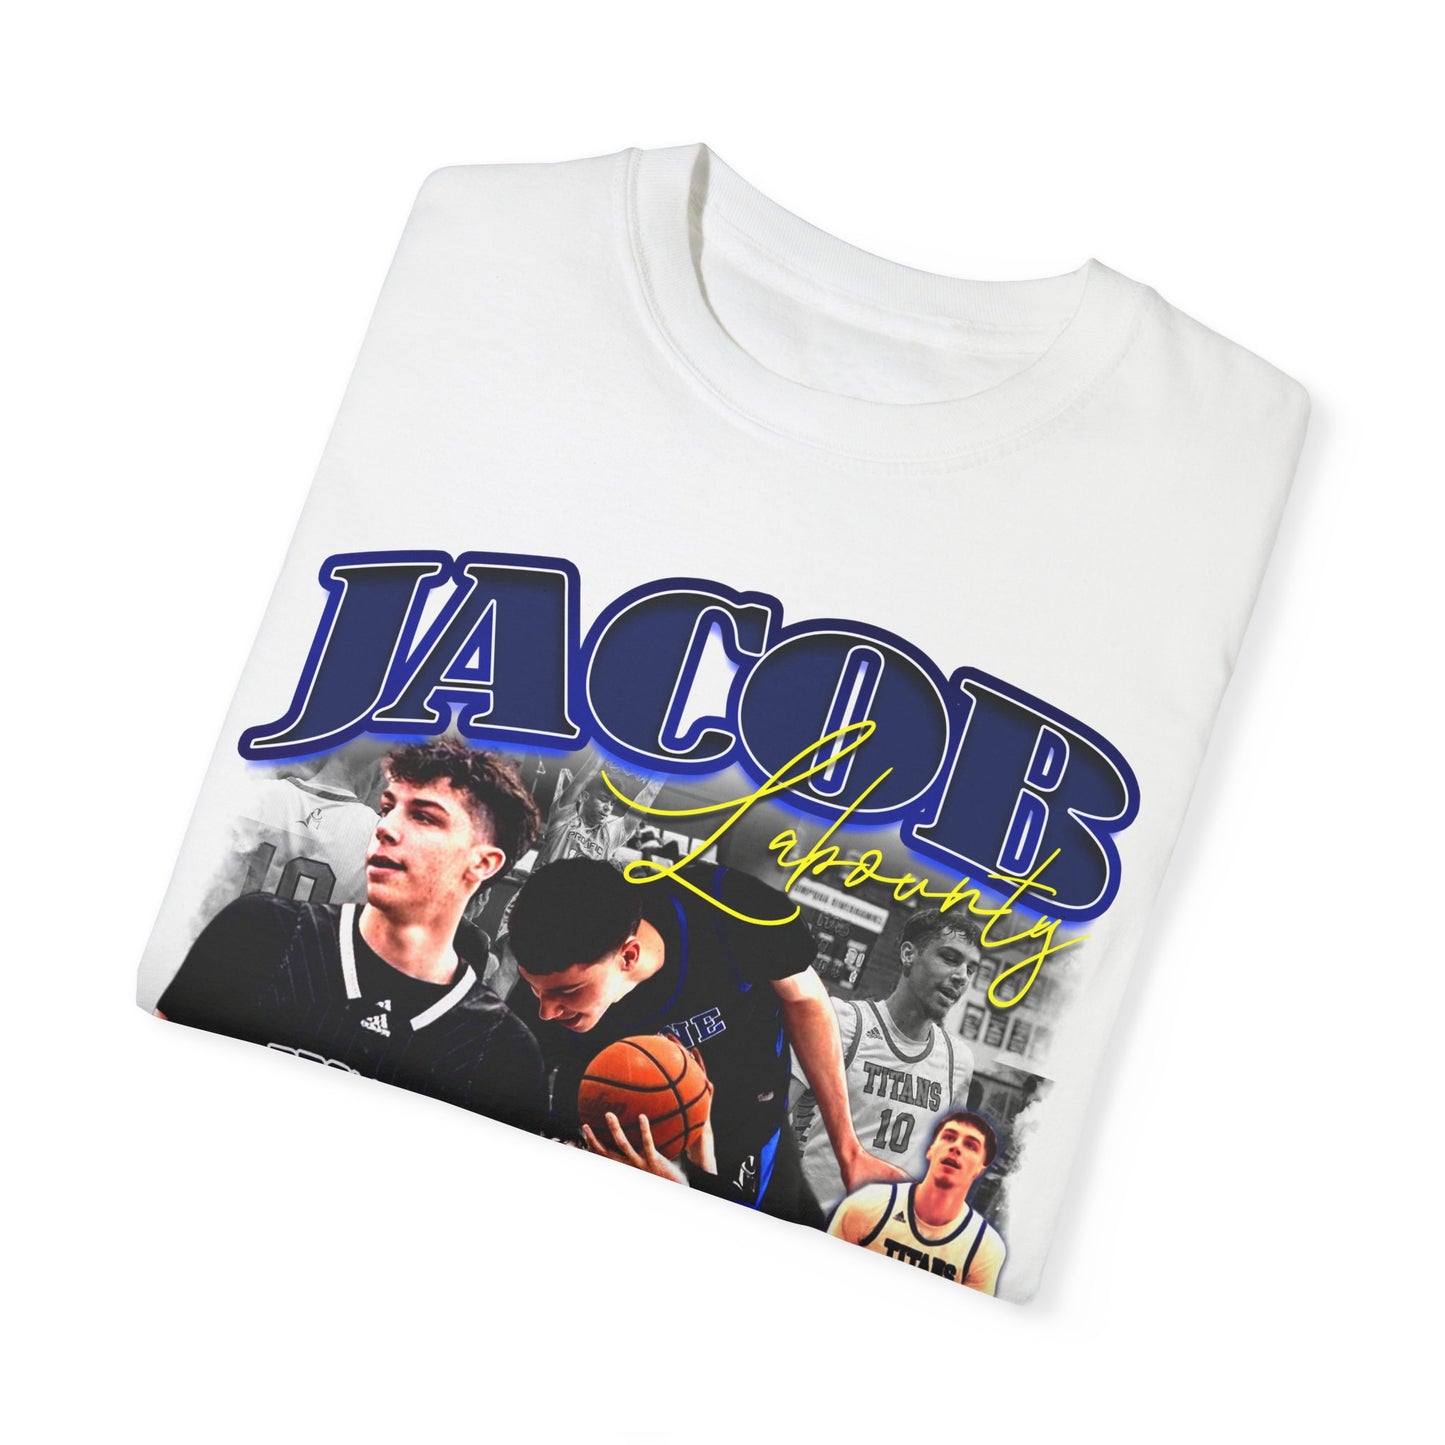 Jacob Labounty Graphic T-shirt